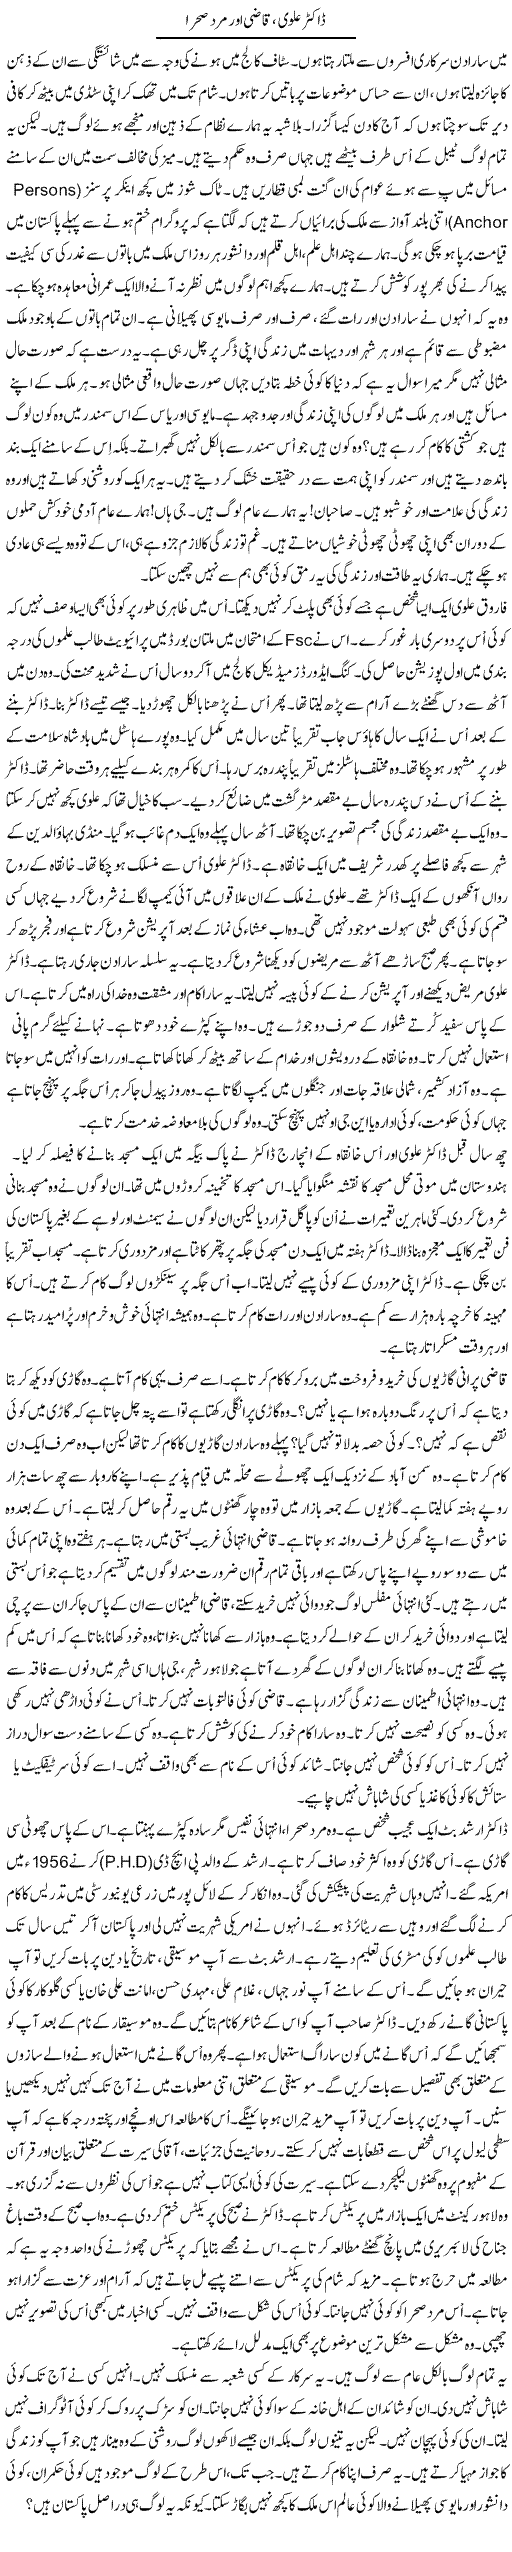 Dr. Alvi Qazi Our Mard e Sehra | Rao Manzar Hayat | Daily Urdu Columns